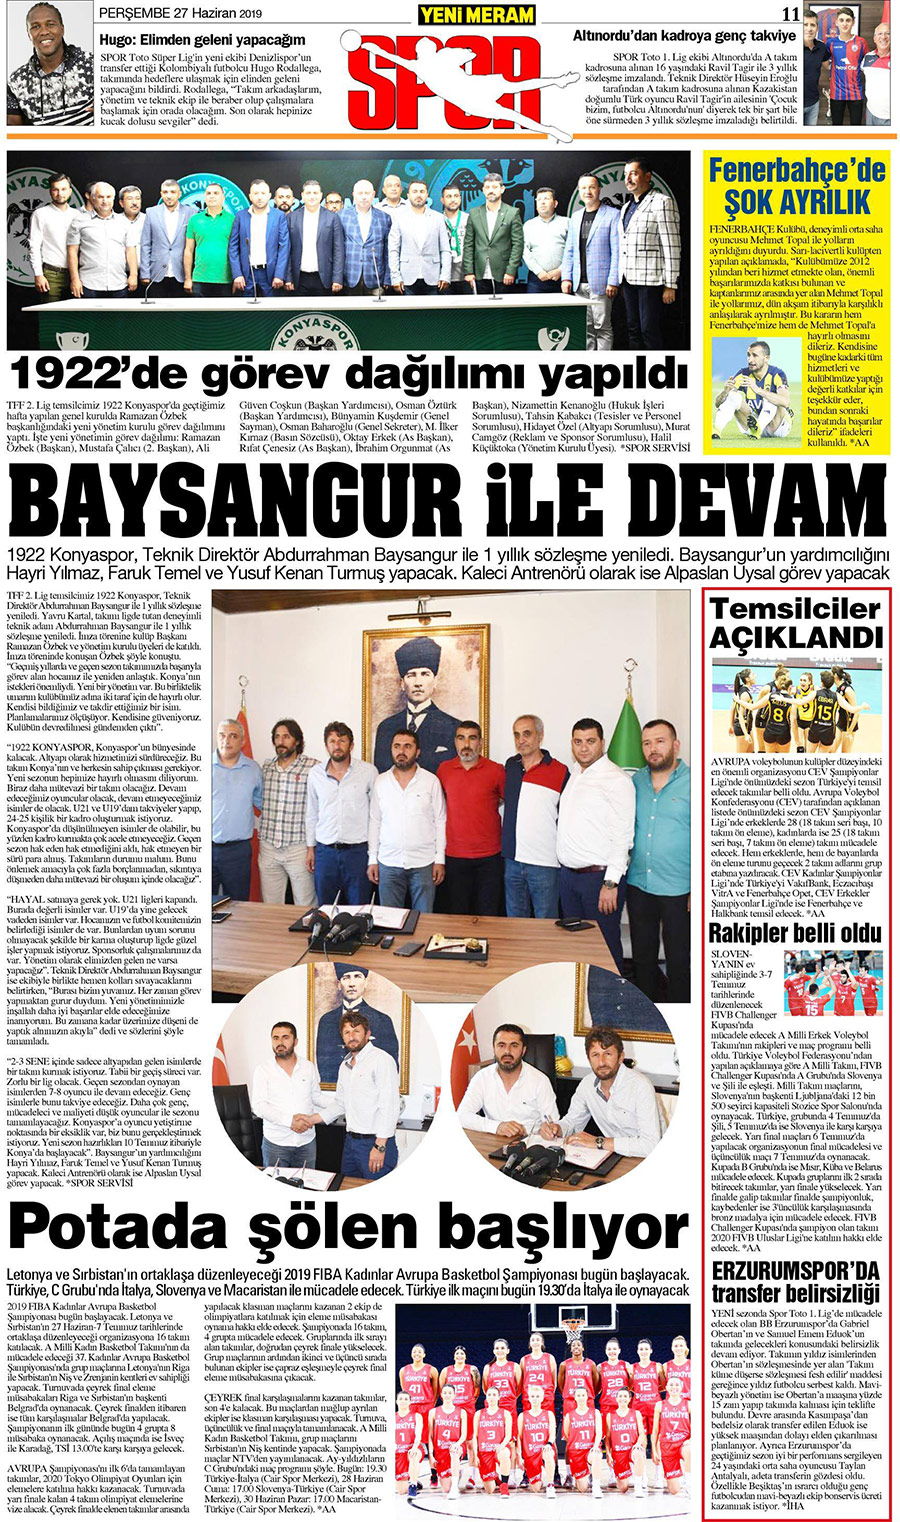 27 Haziran 2019 Yeni Meram Gazetesi